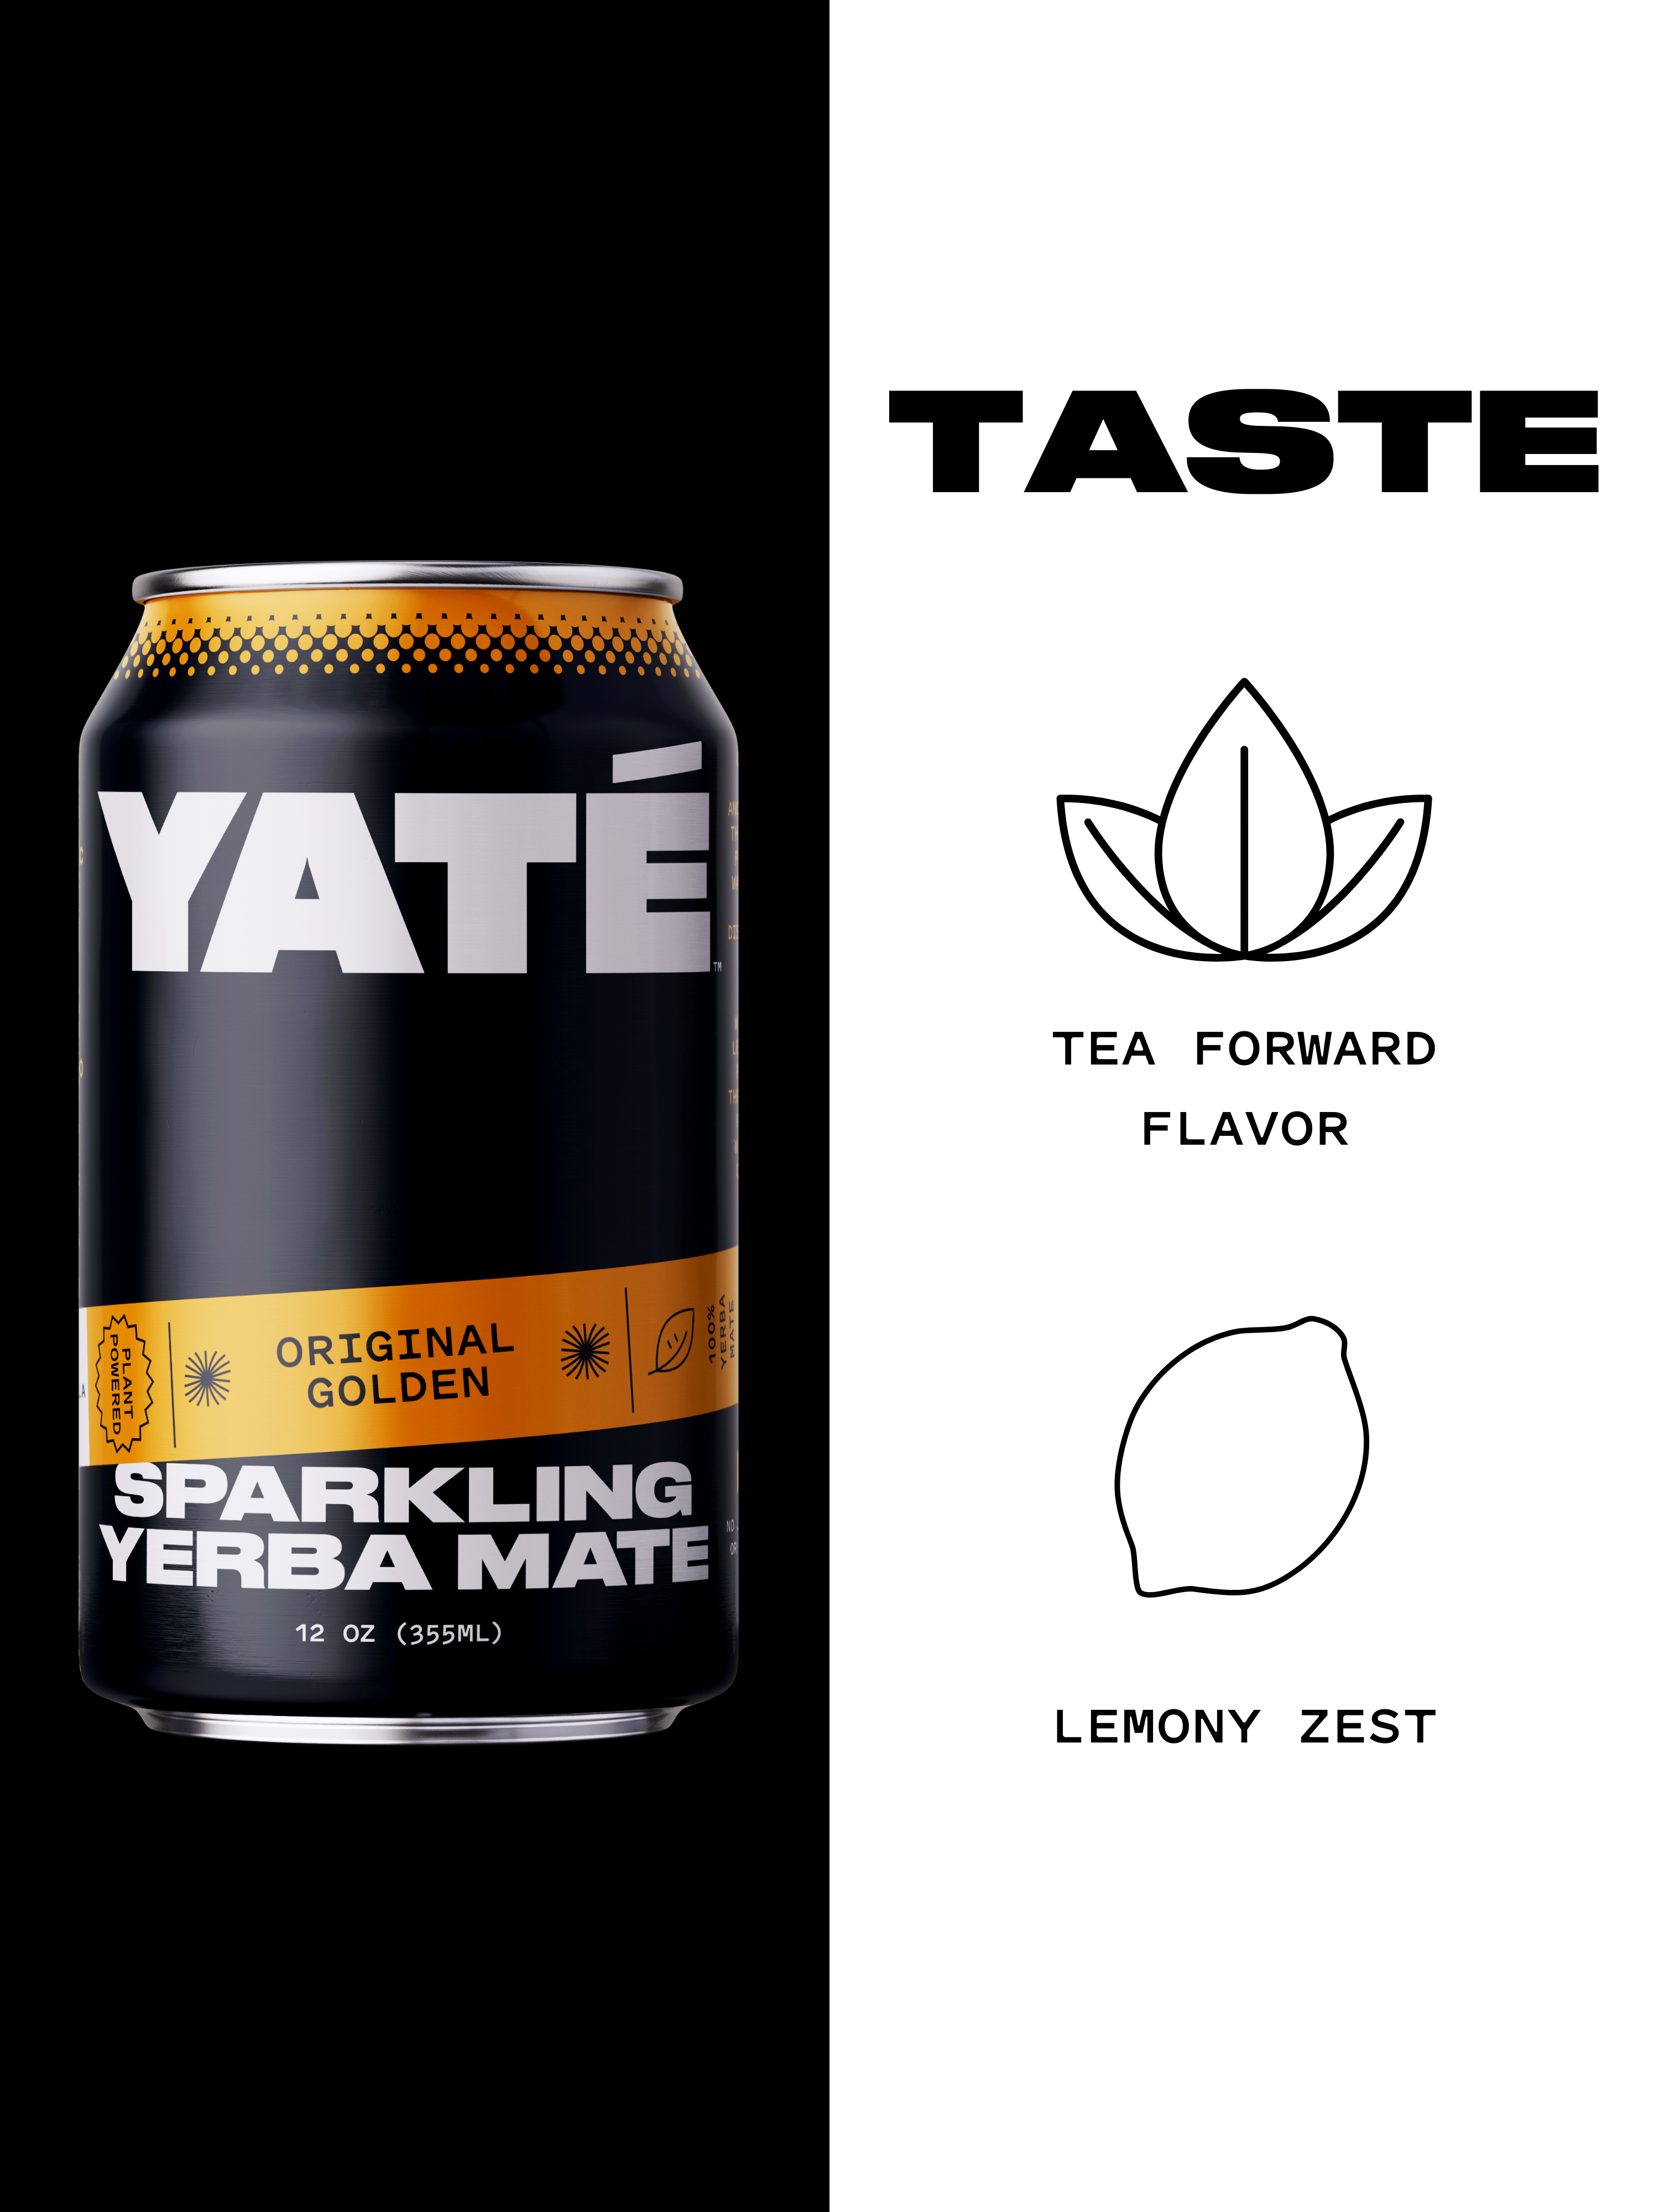 Yate Yerba Mate Original Golden Flavor 12oz Can Flavor Profile